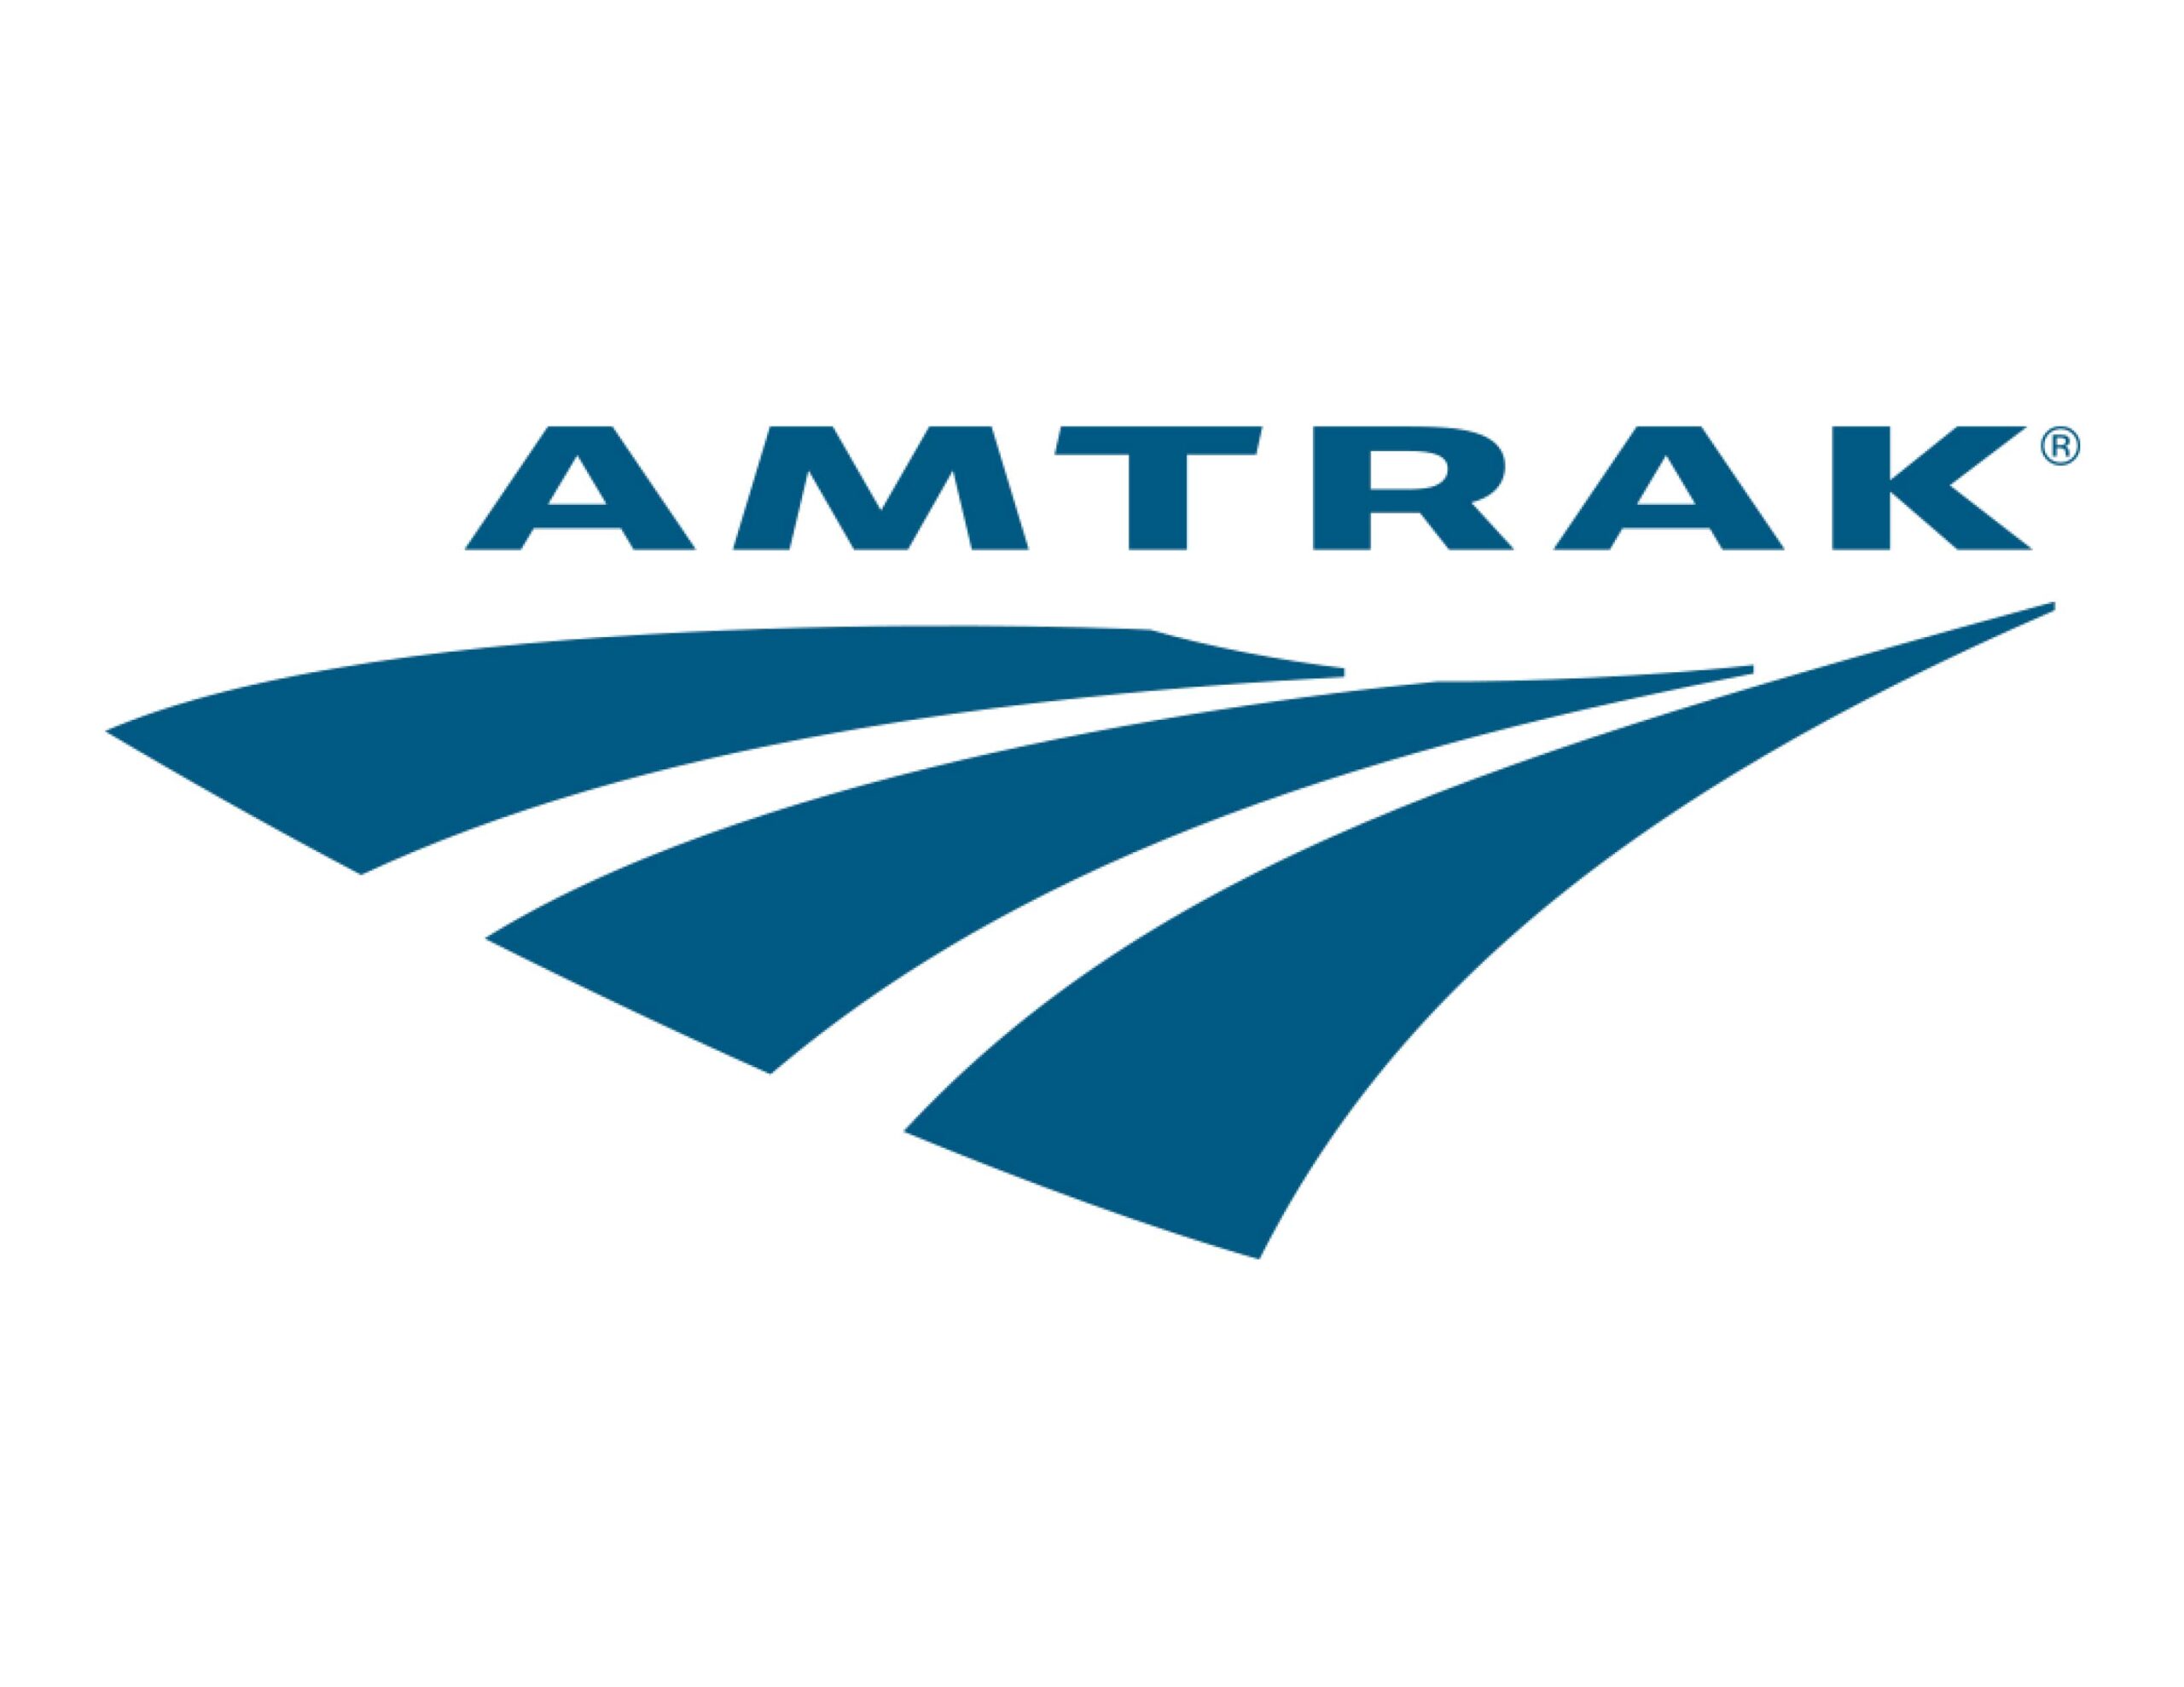 Amtrak, National Railroad Corporation